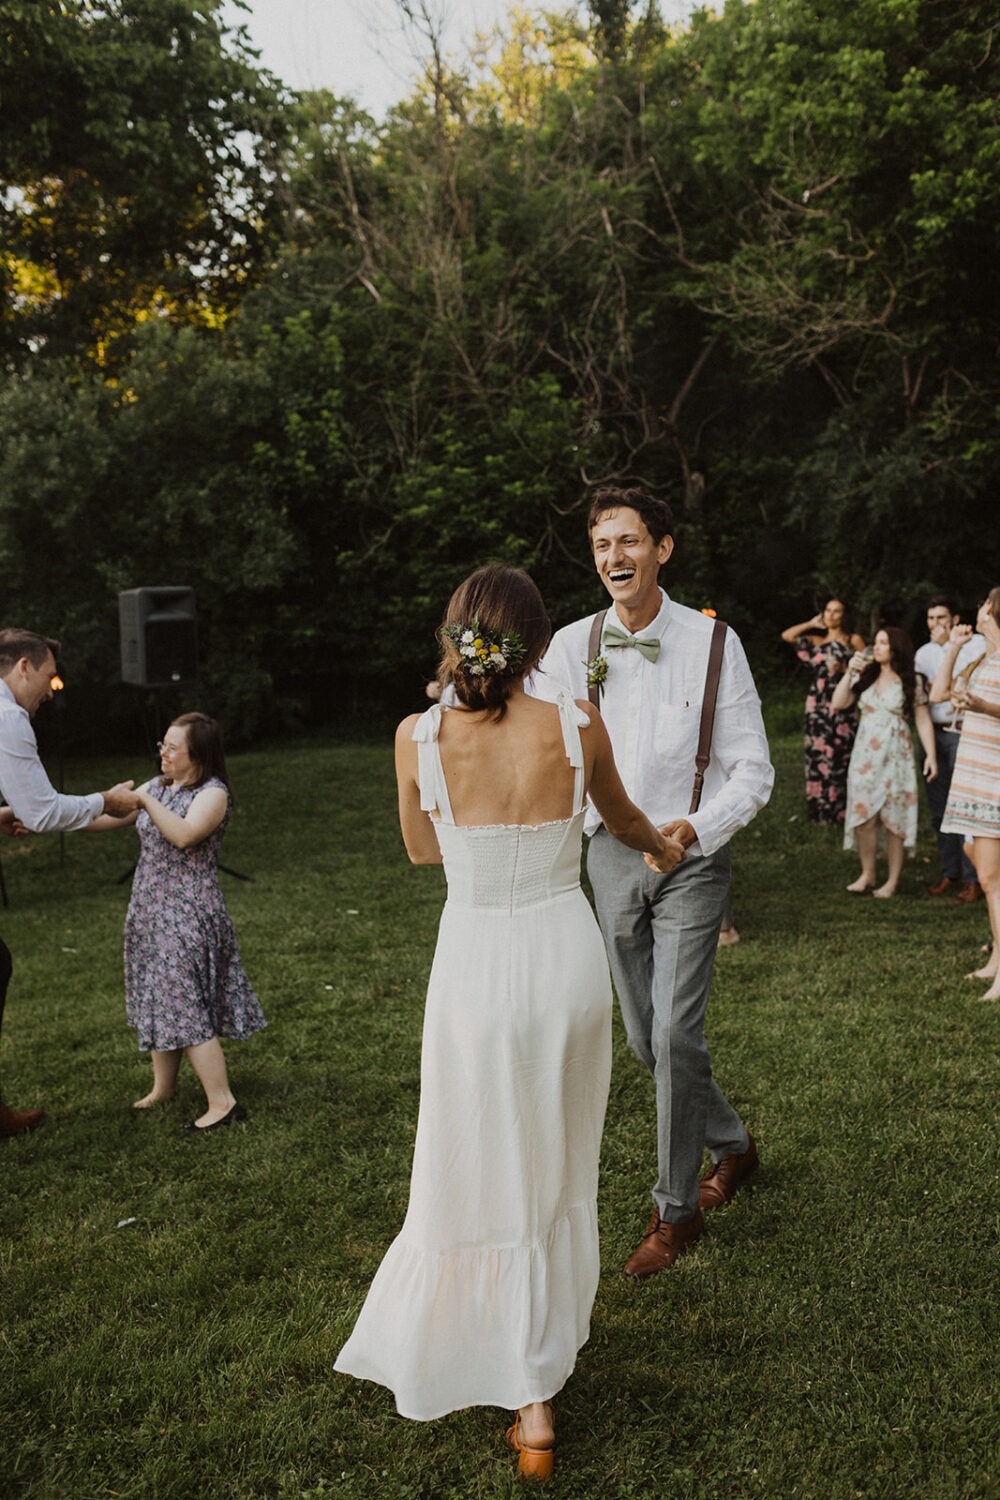 couple dances pulling from barn wedding ideas